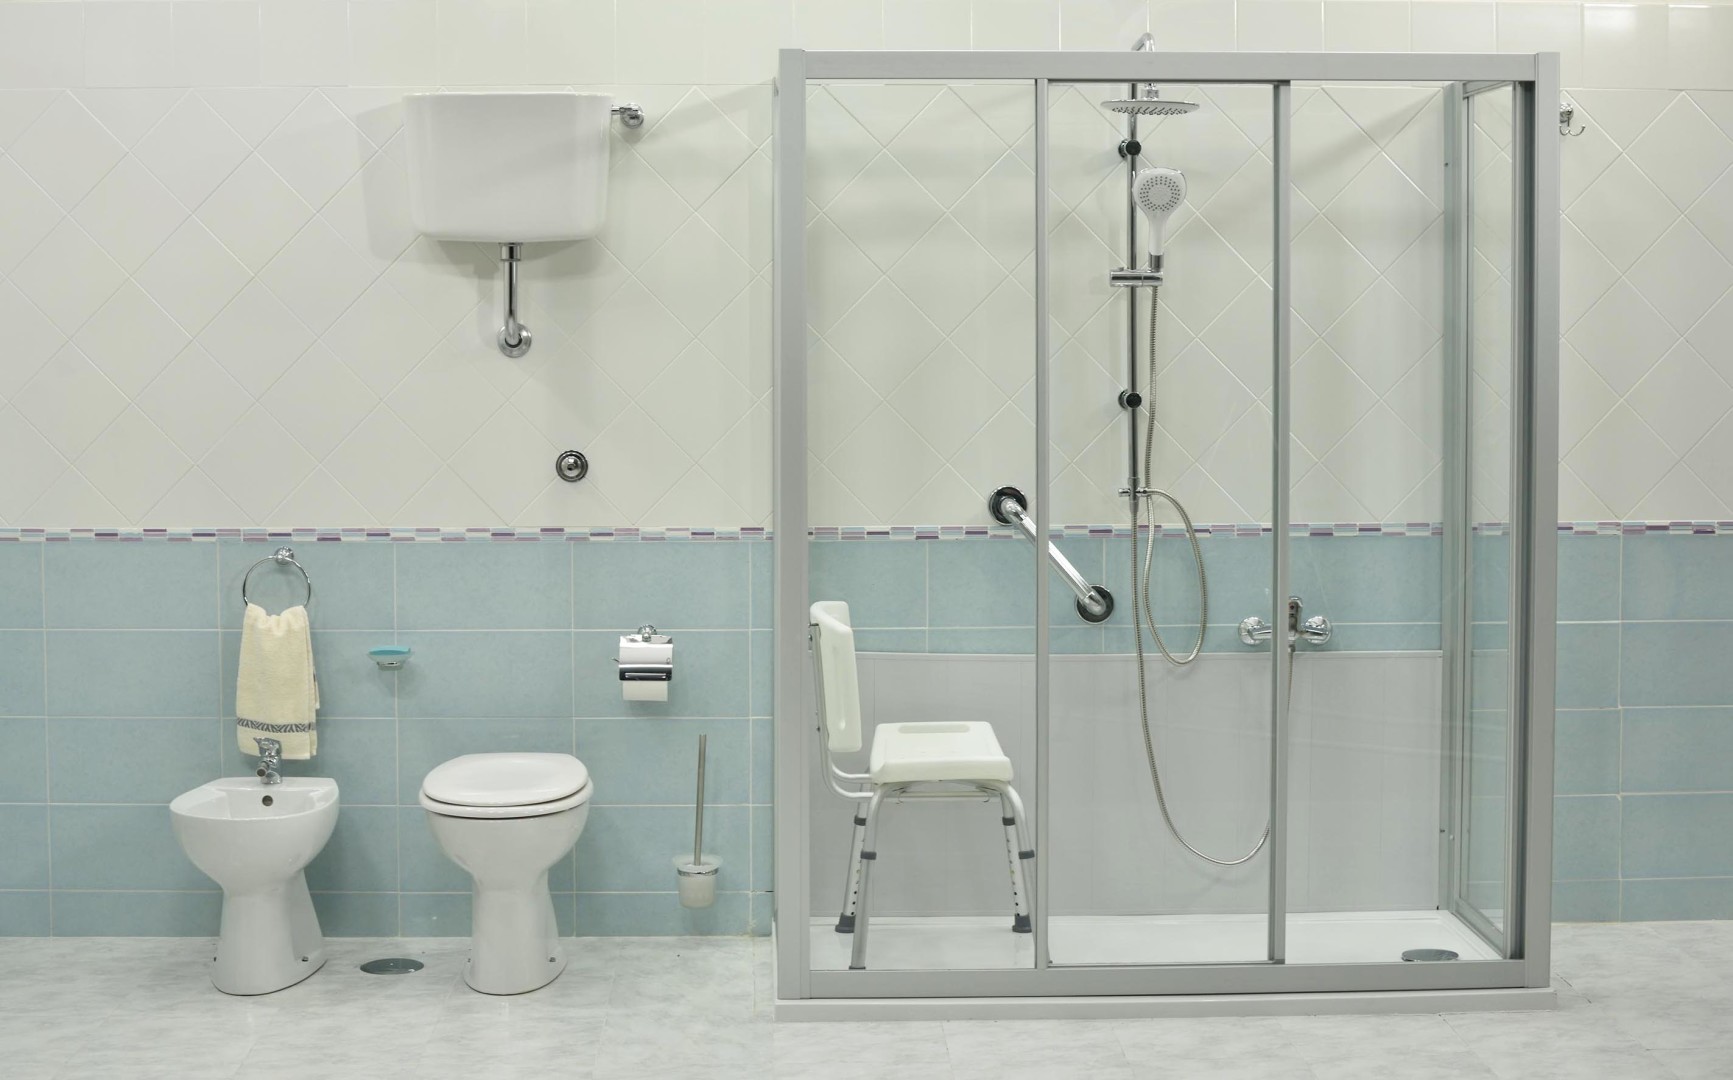 Vasca o doccia: qual è la più igienica? | Docciatime.it trasforma da bagno in doccia in sole 6 ore